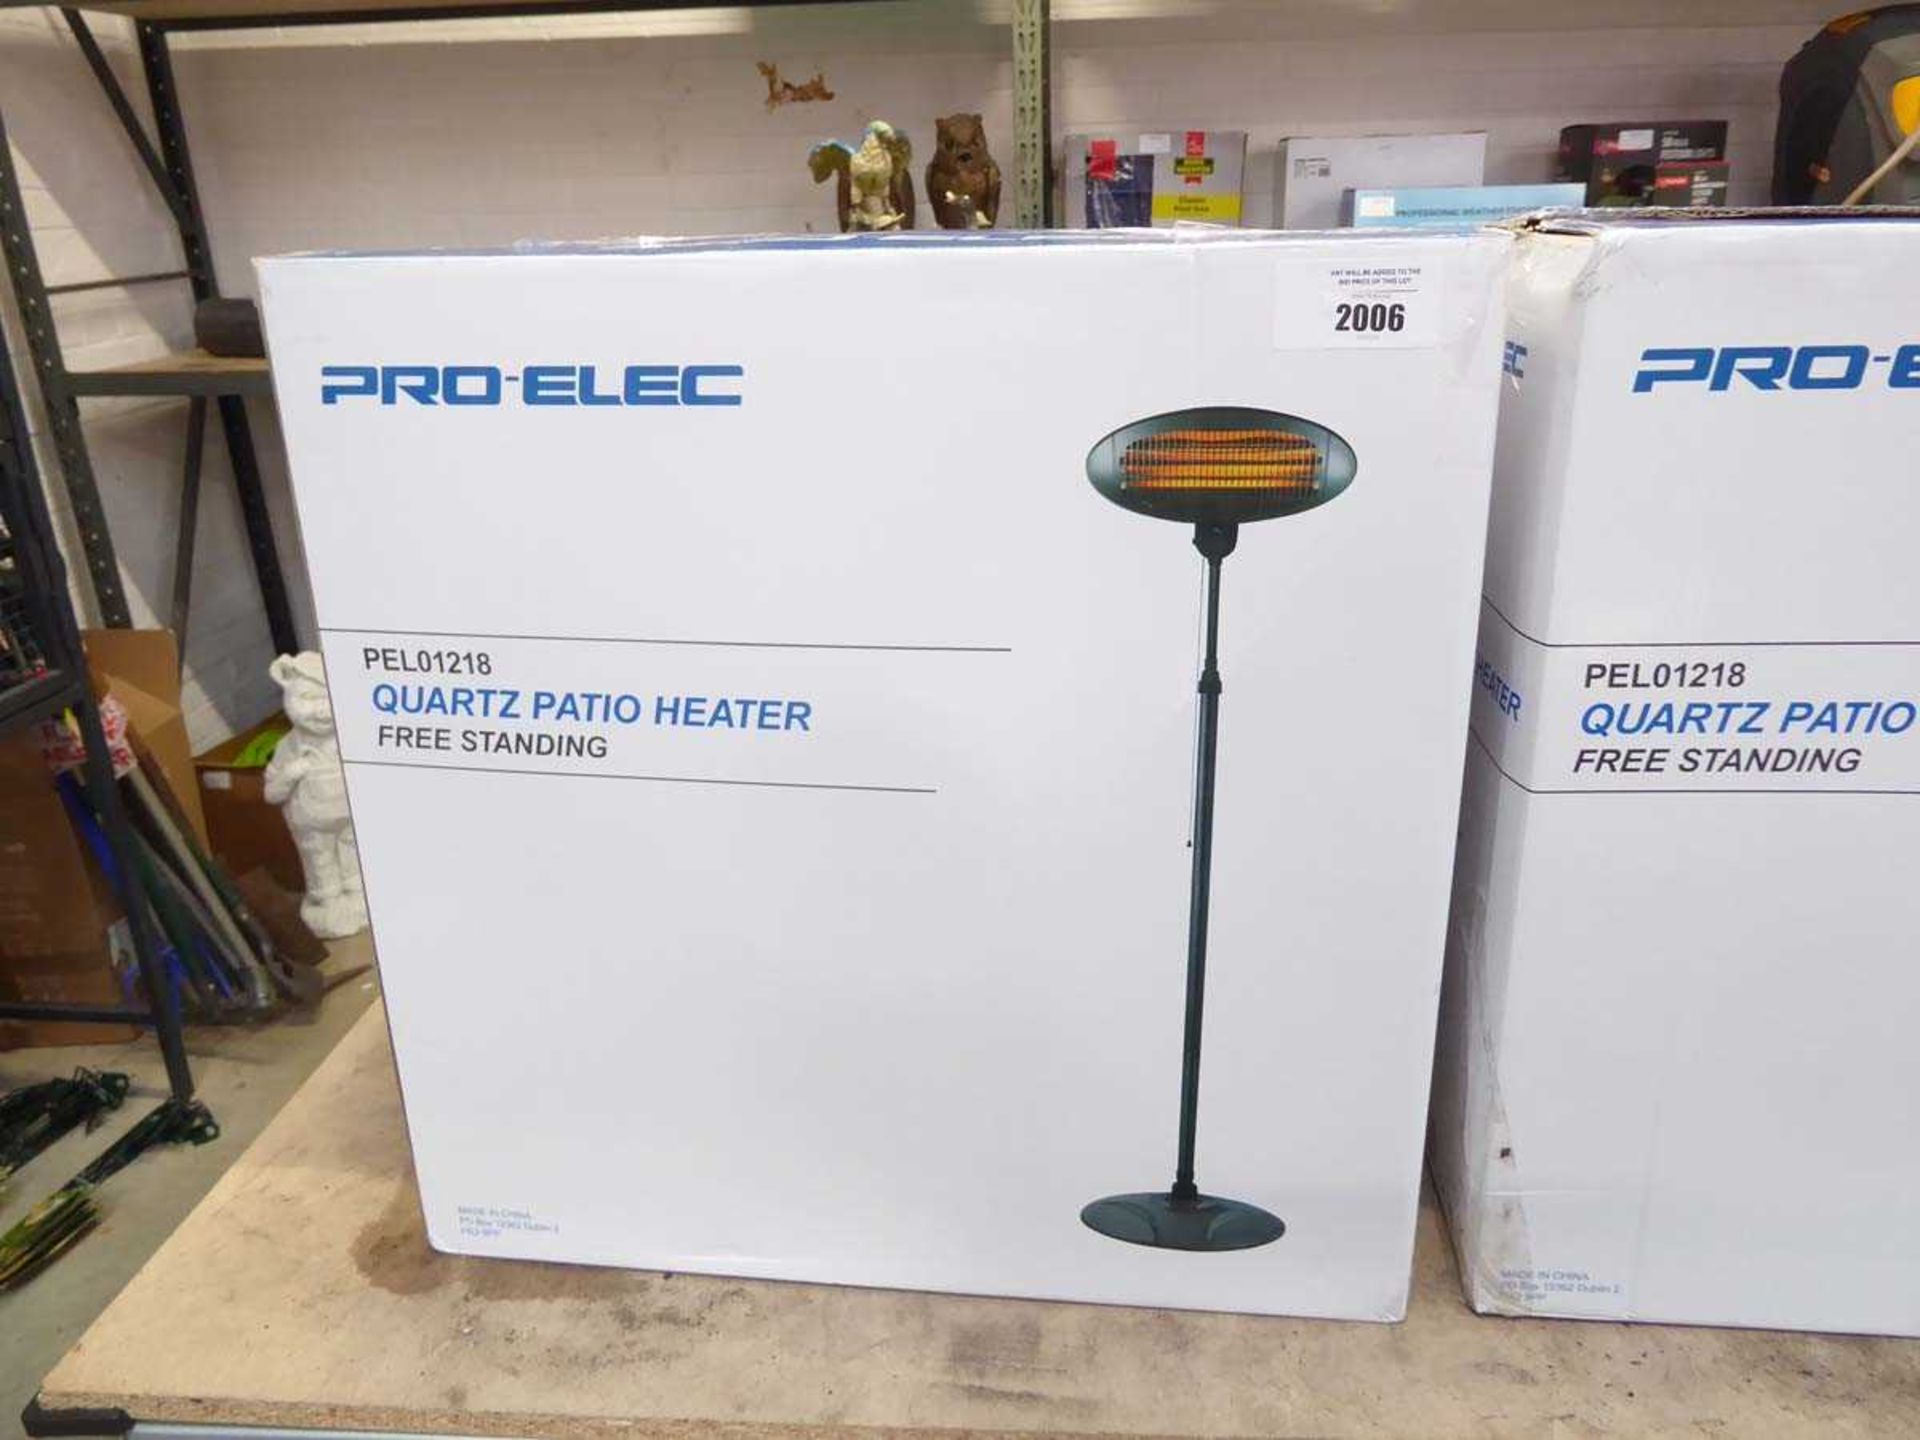 +VAT Boxed Pro-Elec free standing patio heater